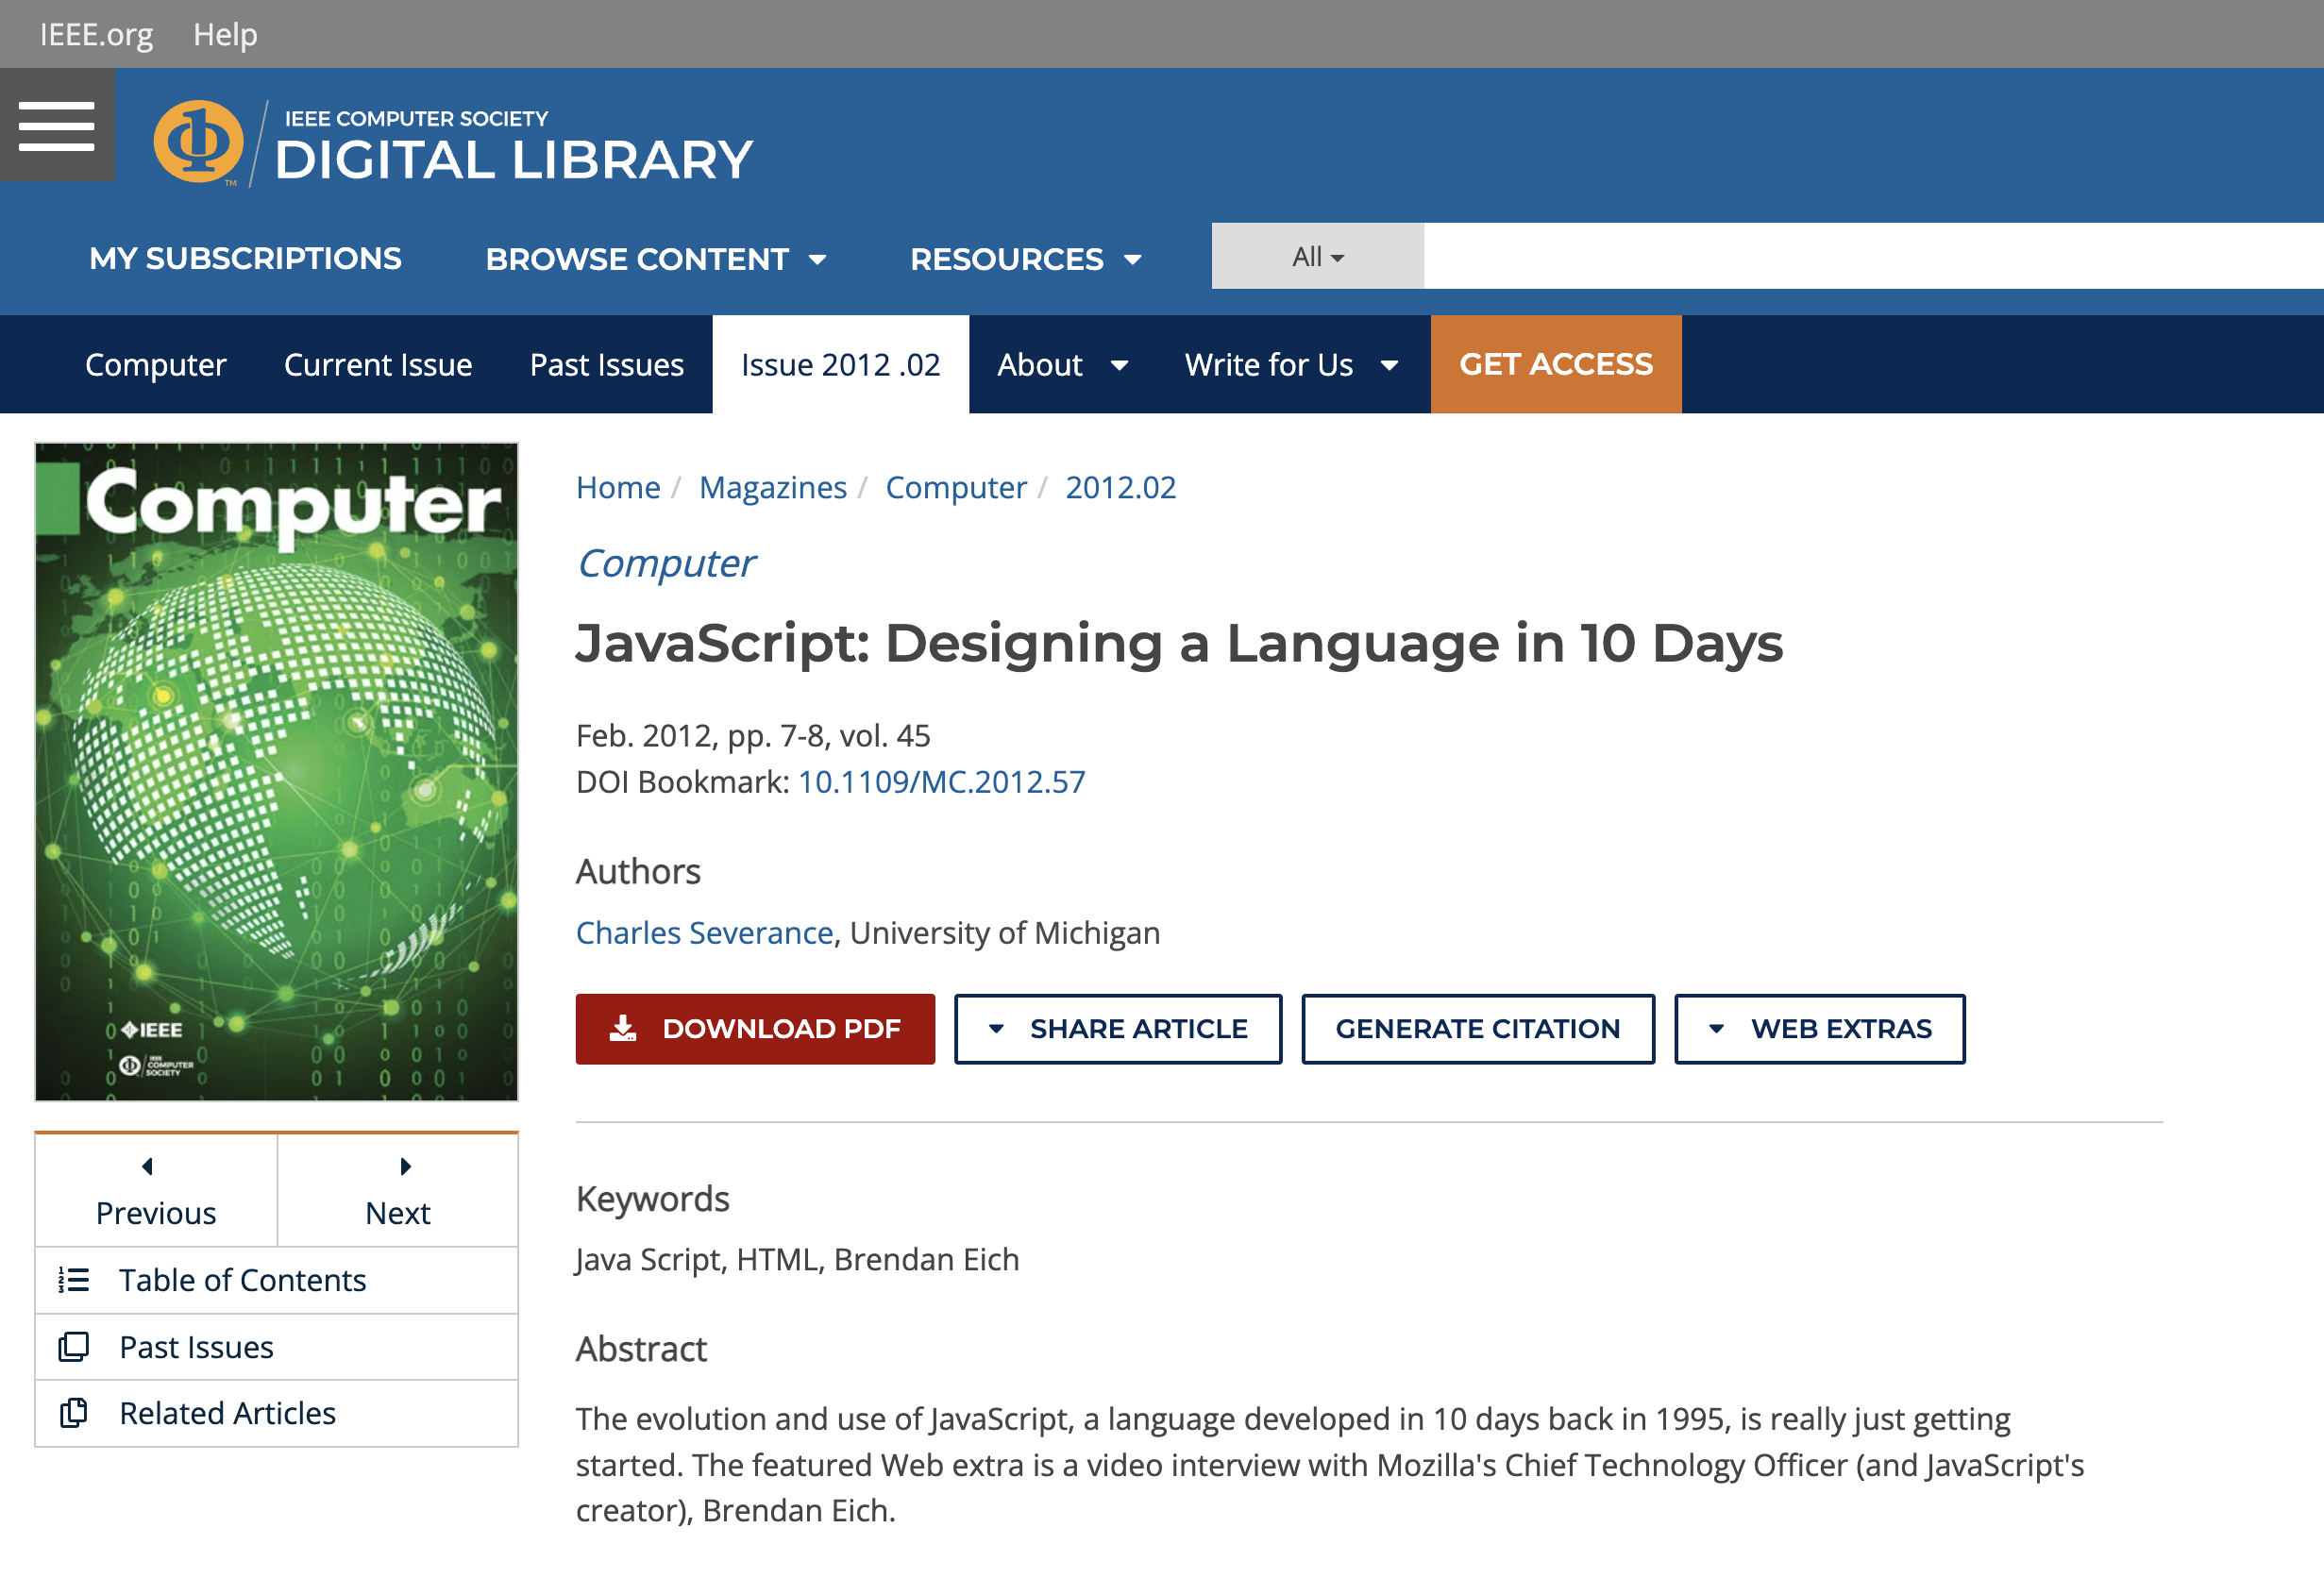 headline: JavaScript: Designing a Language in 10 Days